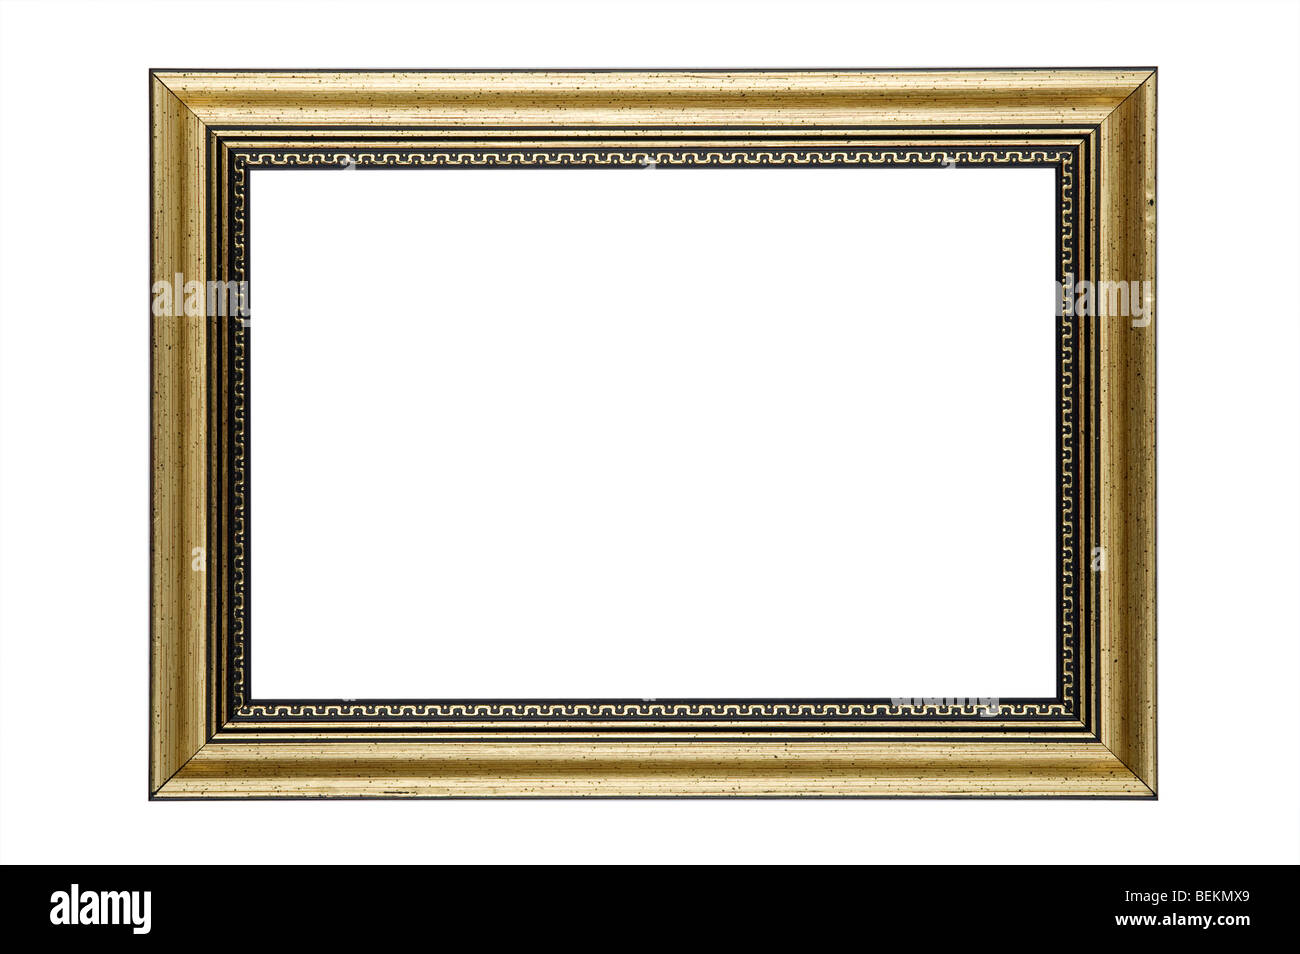 Objekt auf weiß - Holz Bilderrahmen Stockfoto